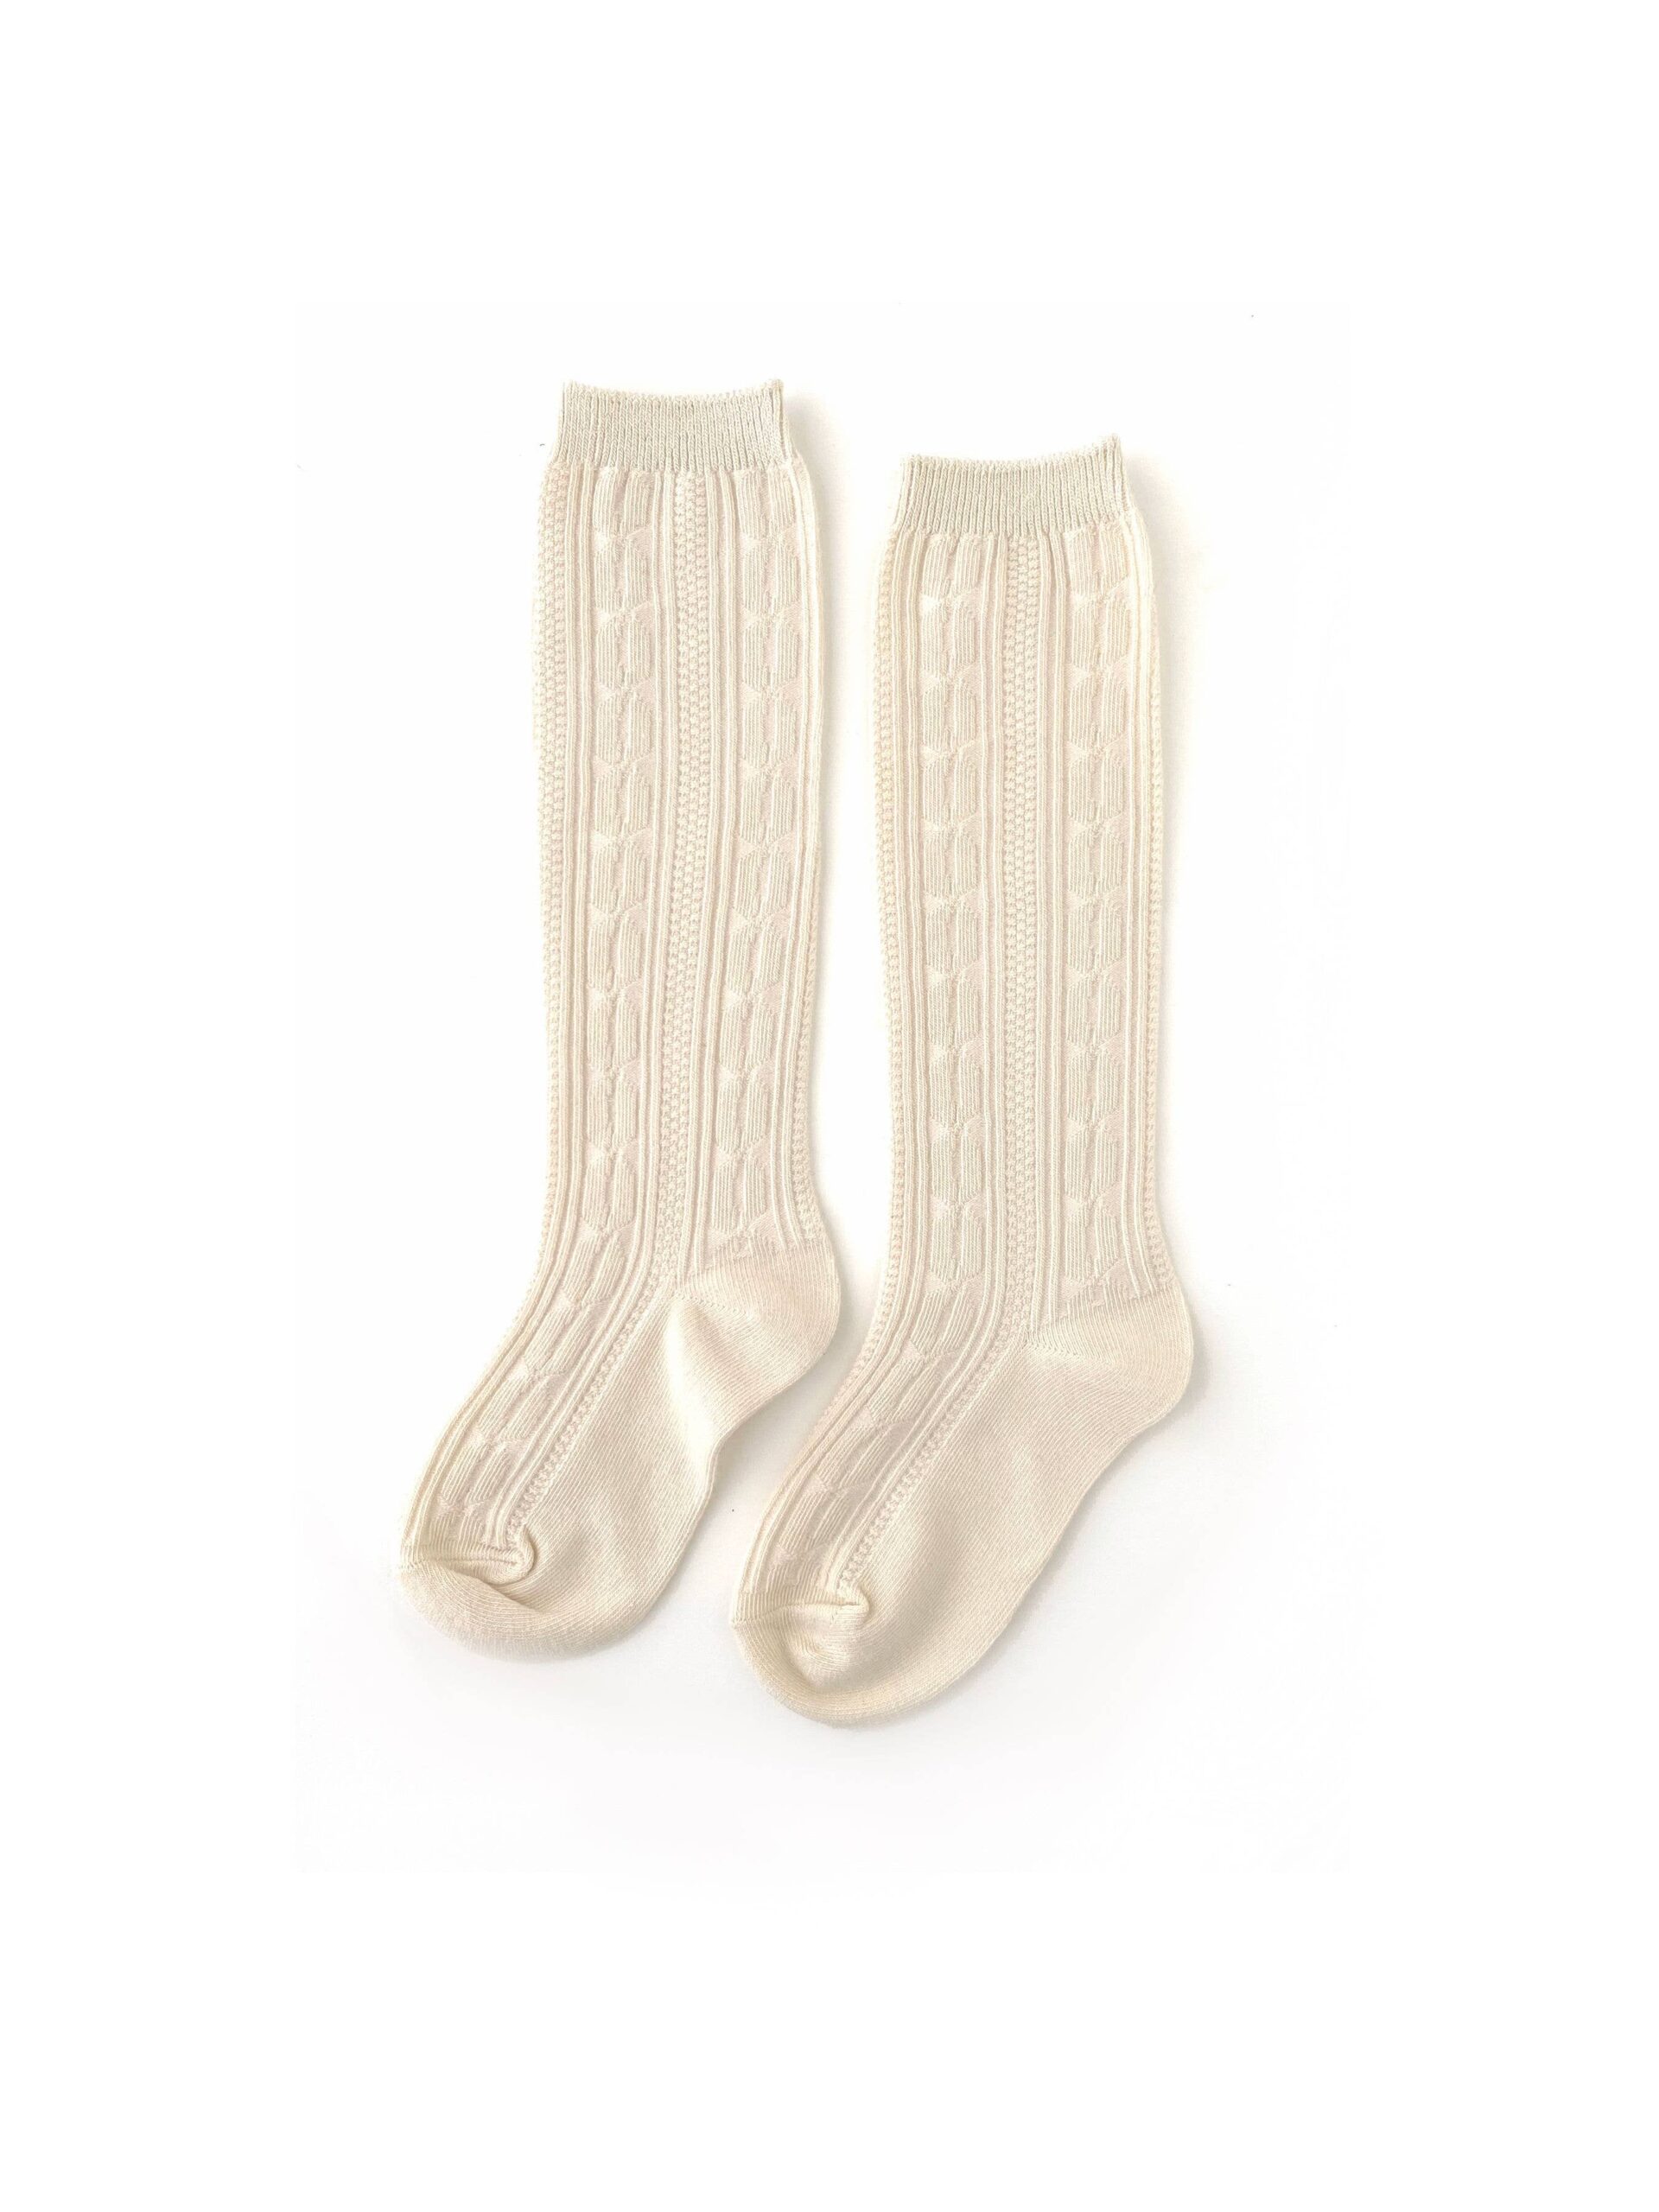 Little Stocking Co Vanilla Cream Knee High Socks